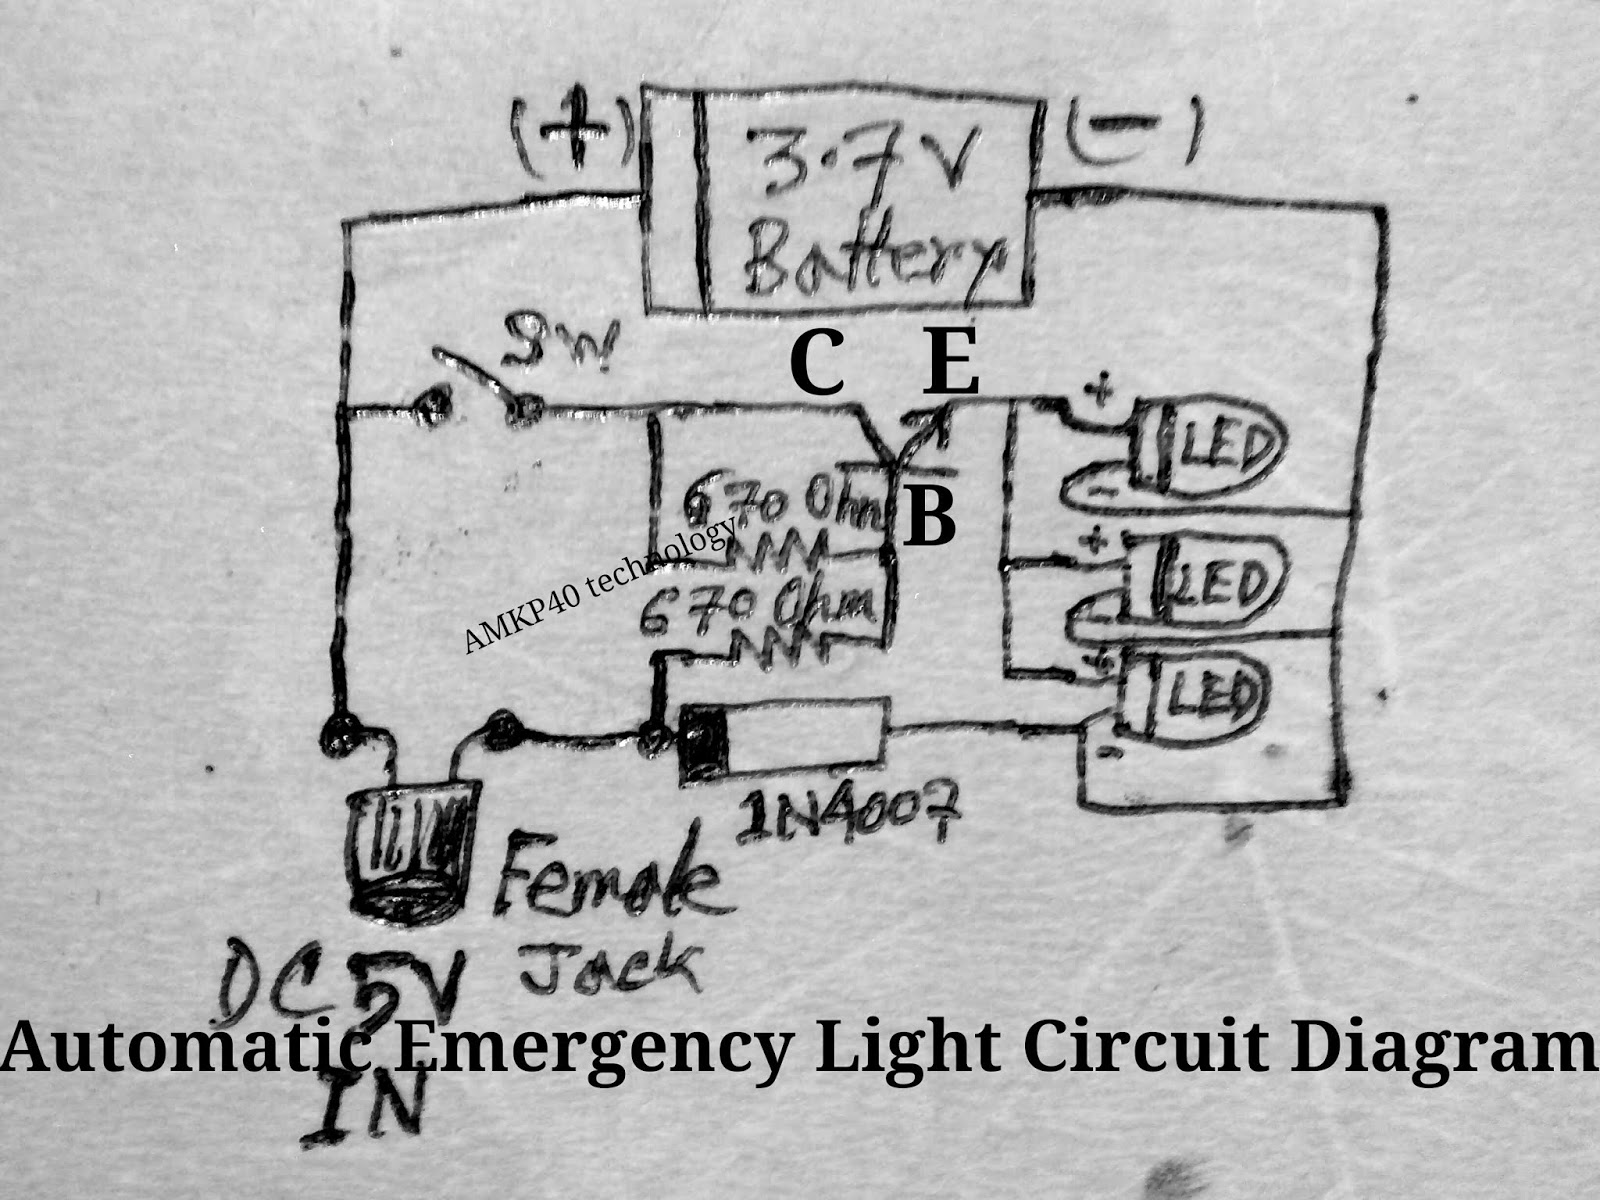 4V or 6V Automatic Emergency Light Circuit Diagram.